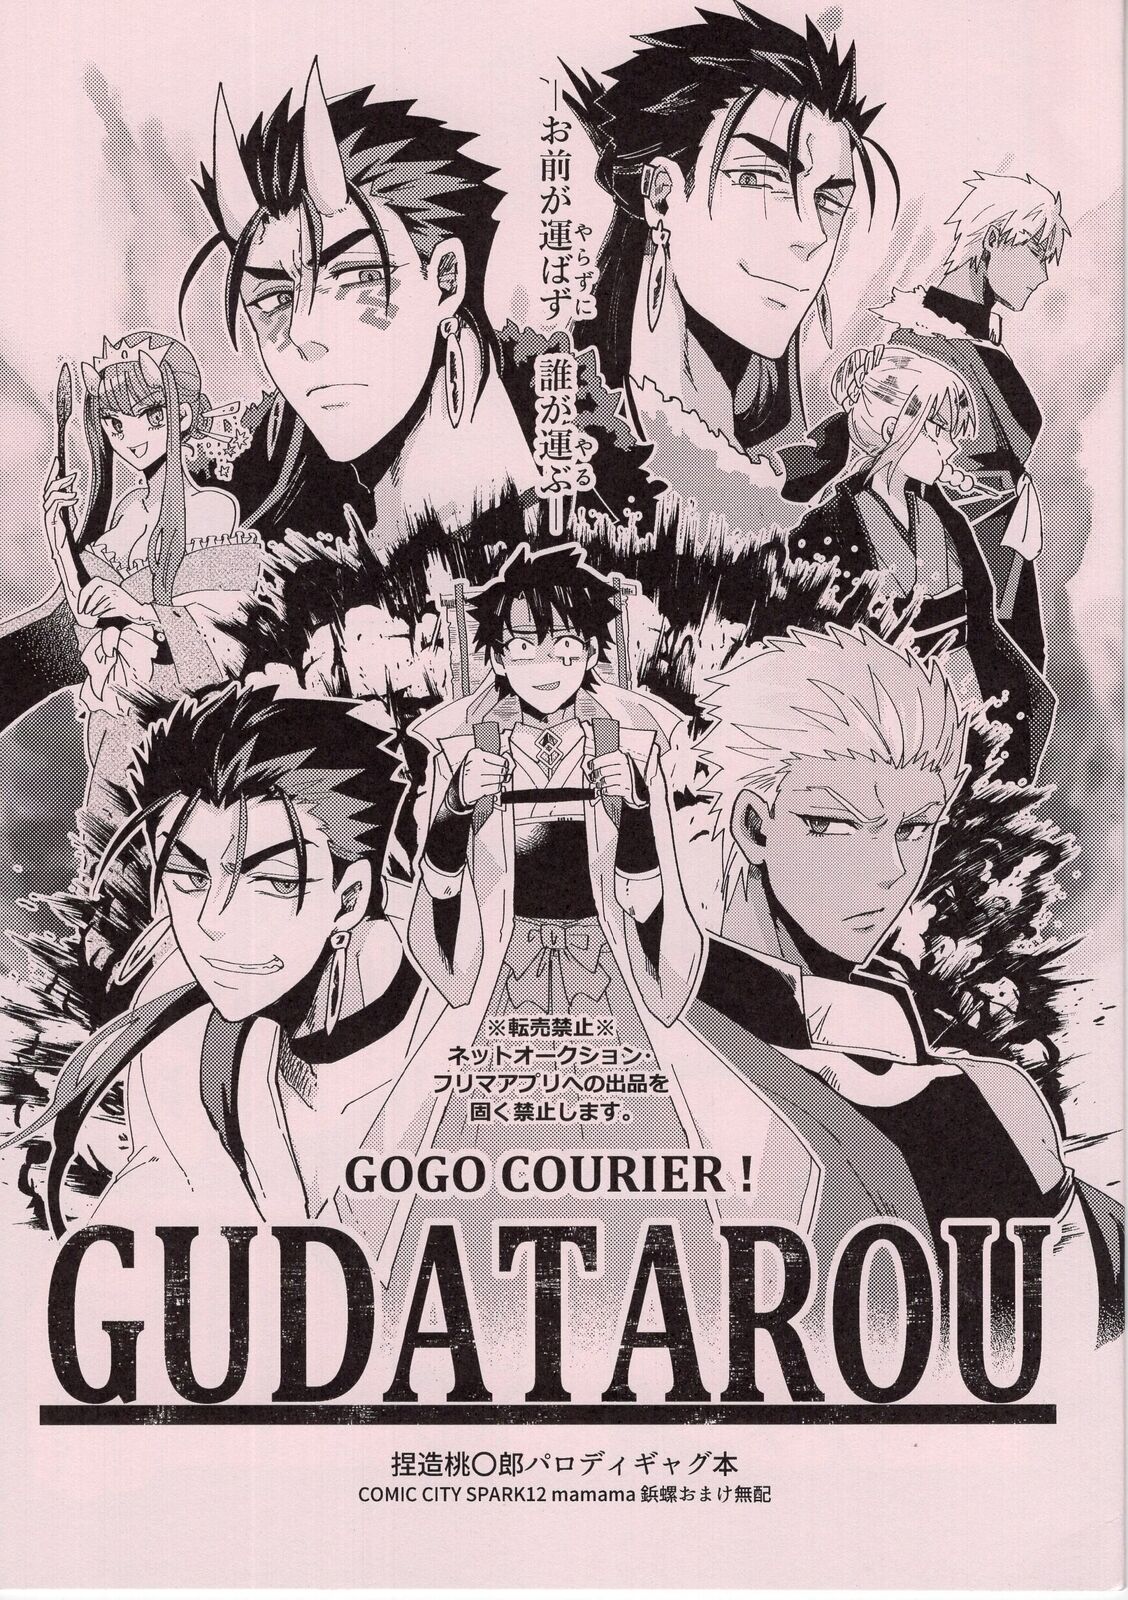 Doujinshi mamama (Matsumoto) GUDATAROU (Fate/Grand Order all characters)